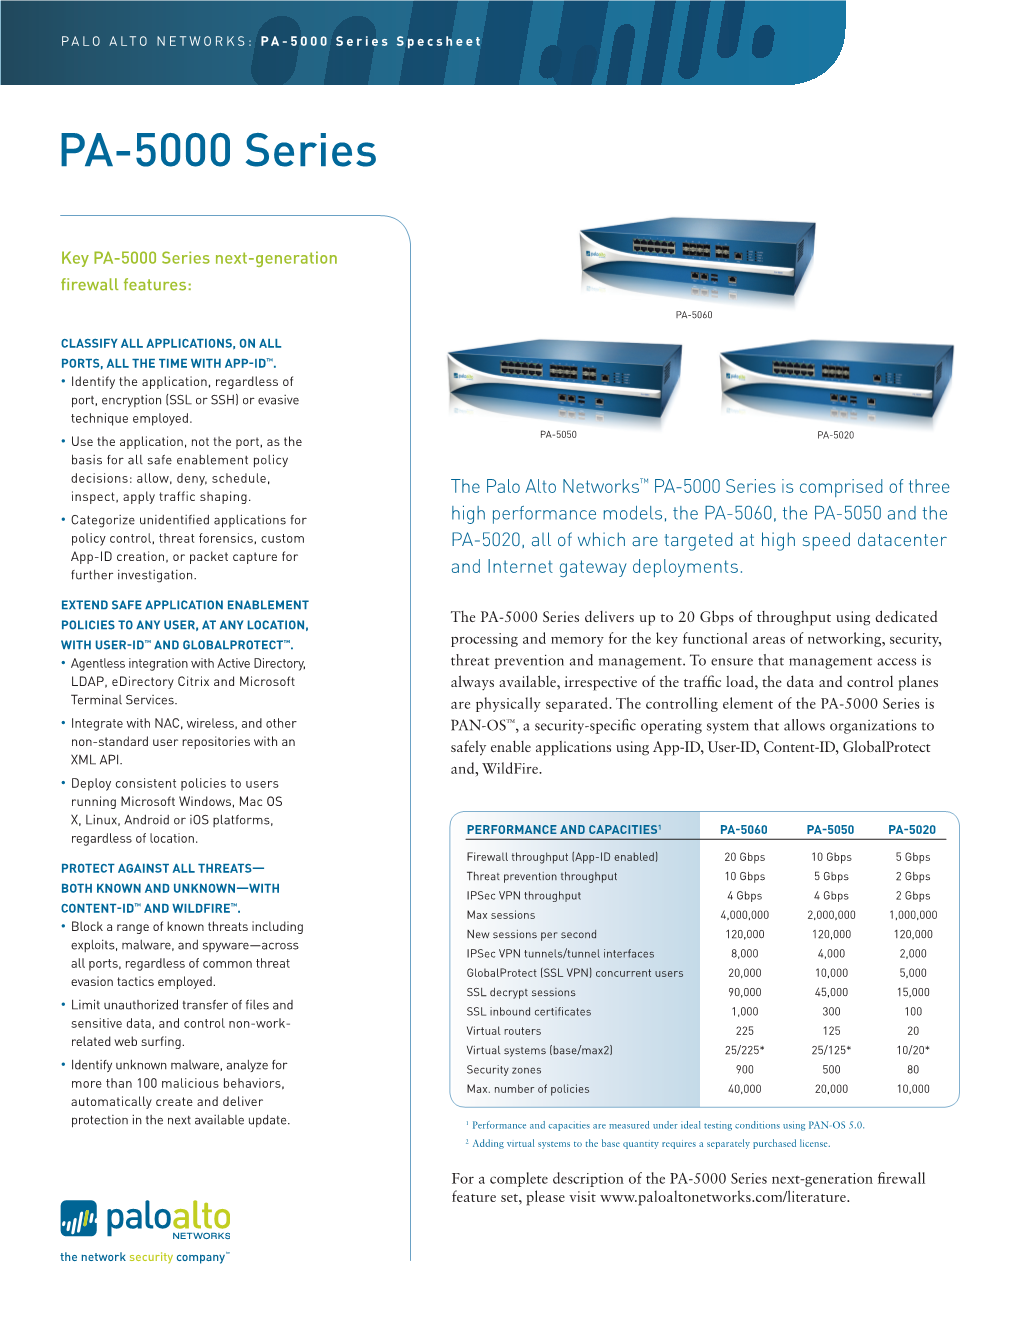 Palo Alto Networks PA-5000 Series Specification Datasheet